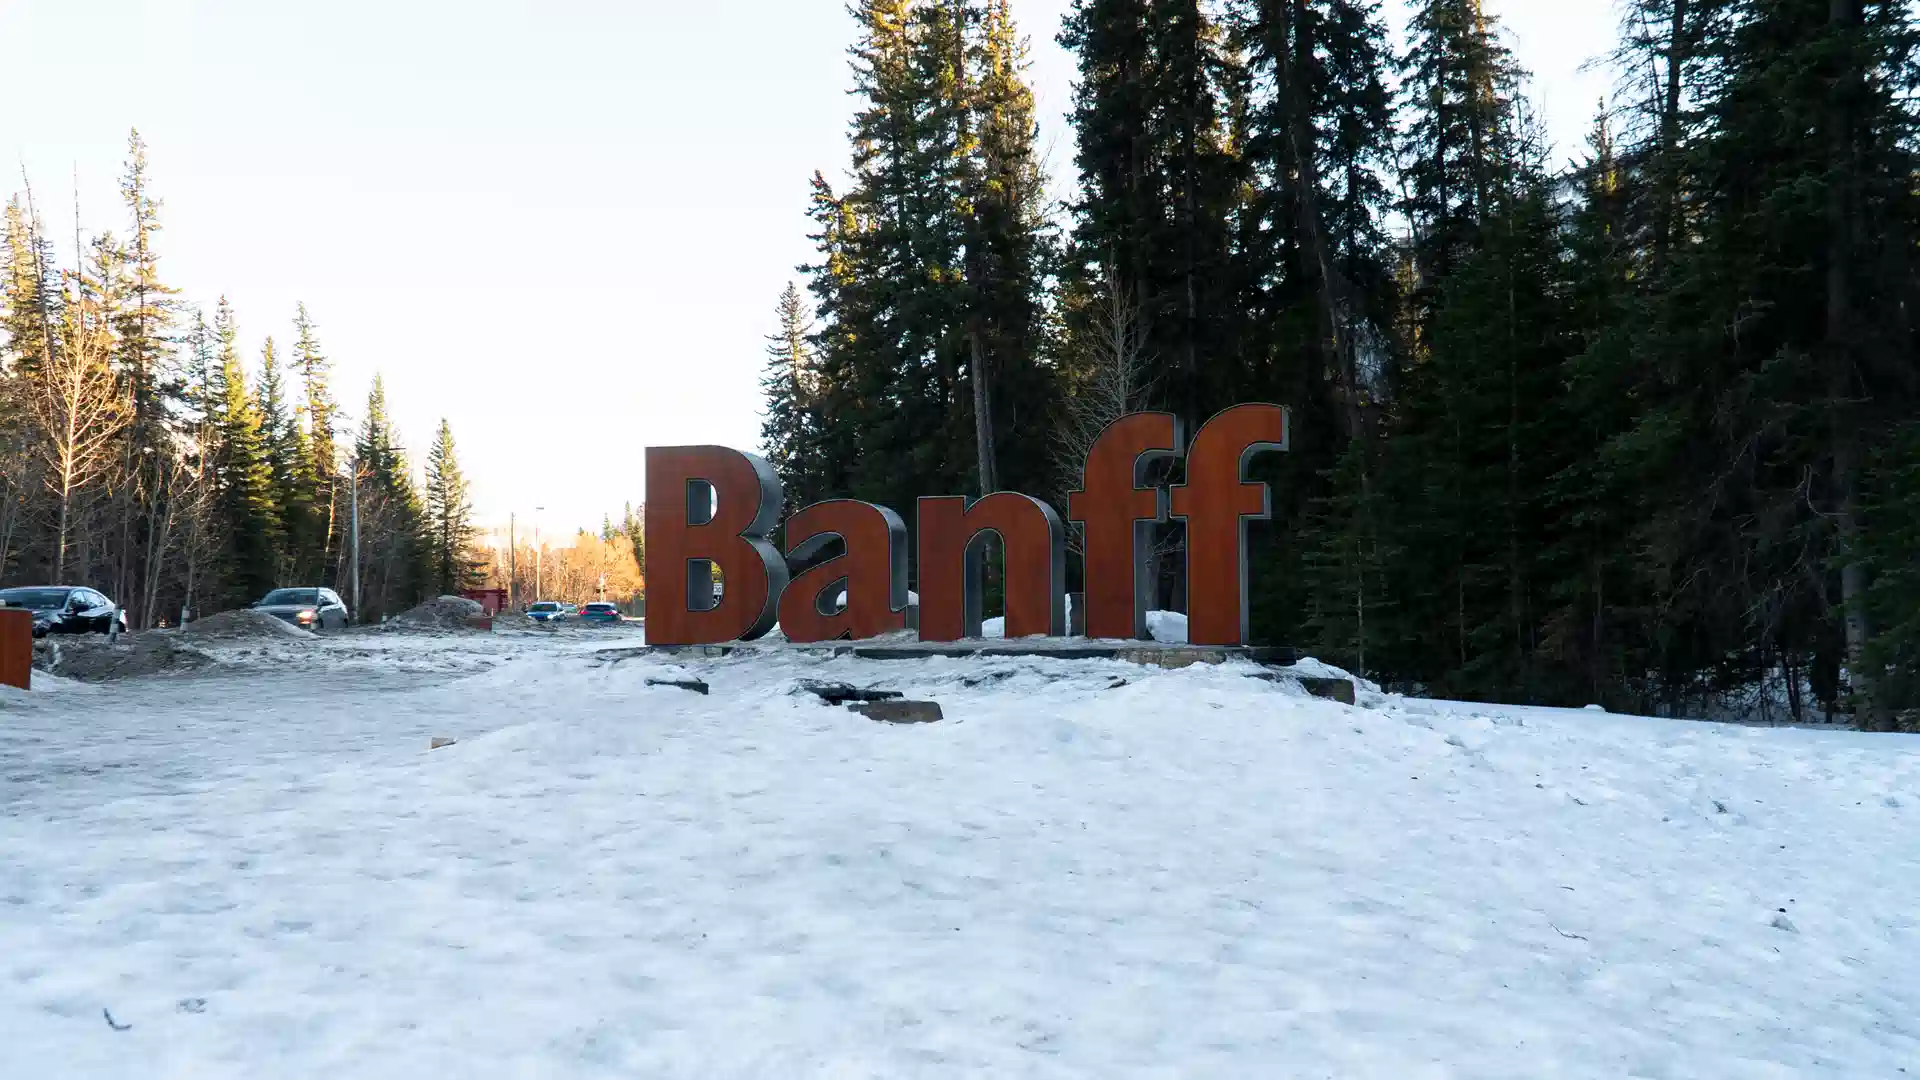 Welcome to Banff imaage